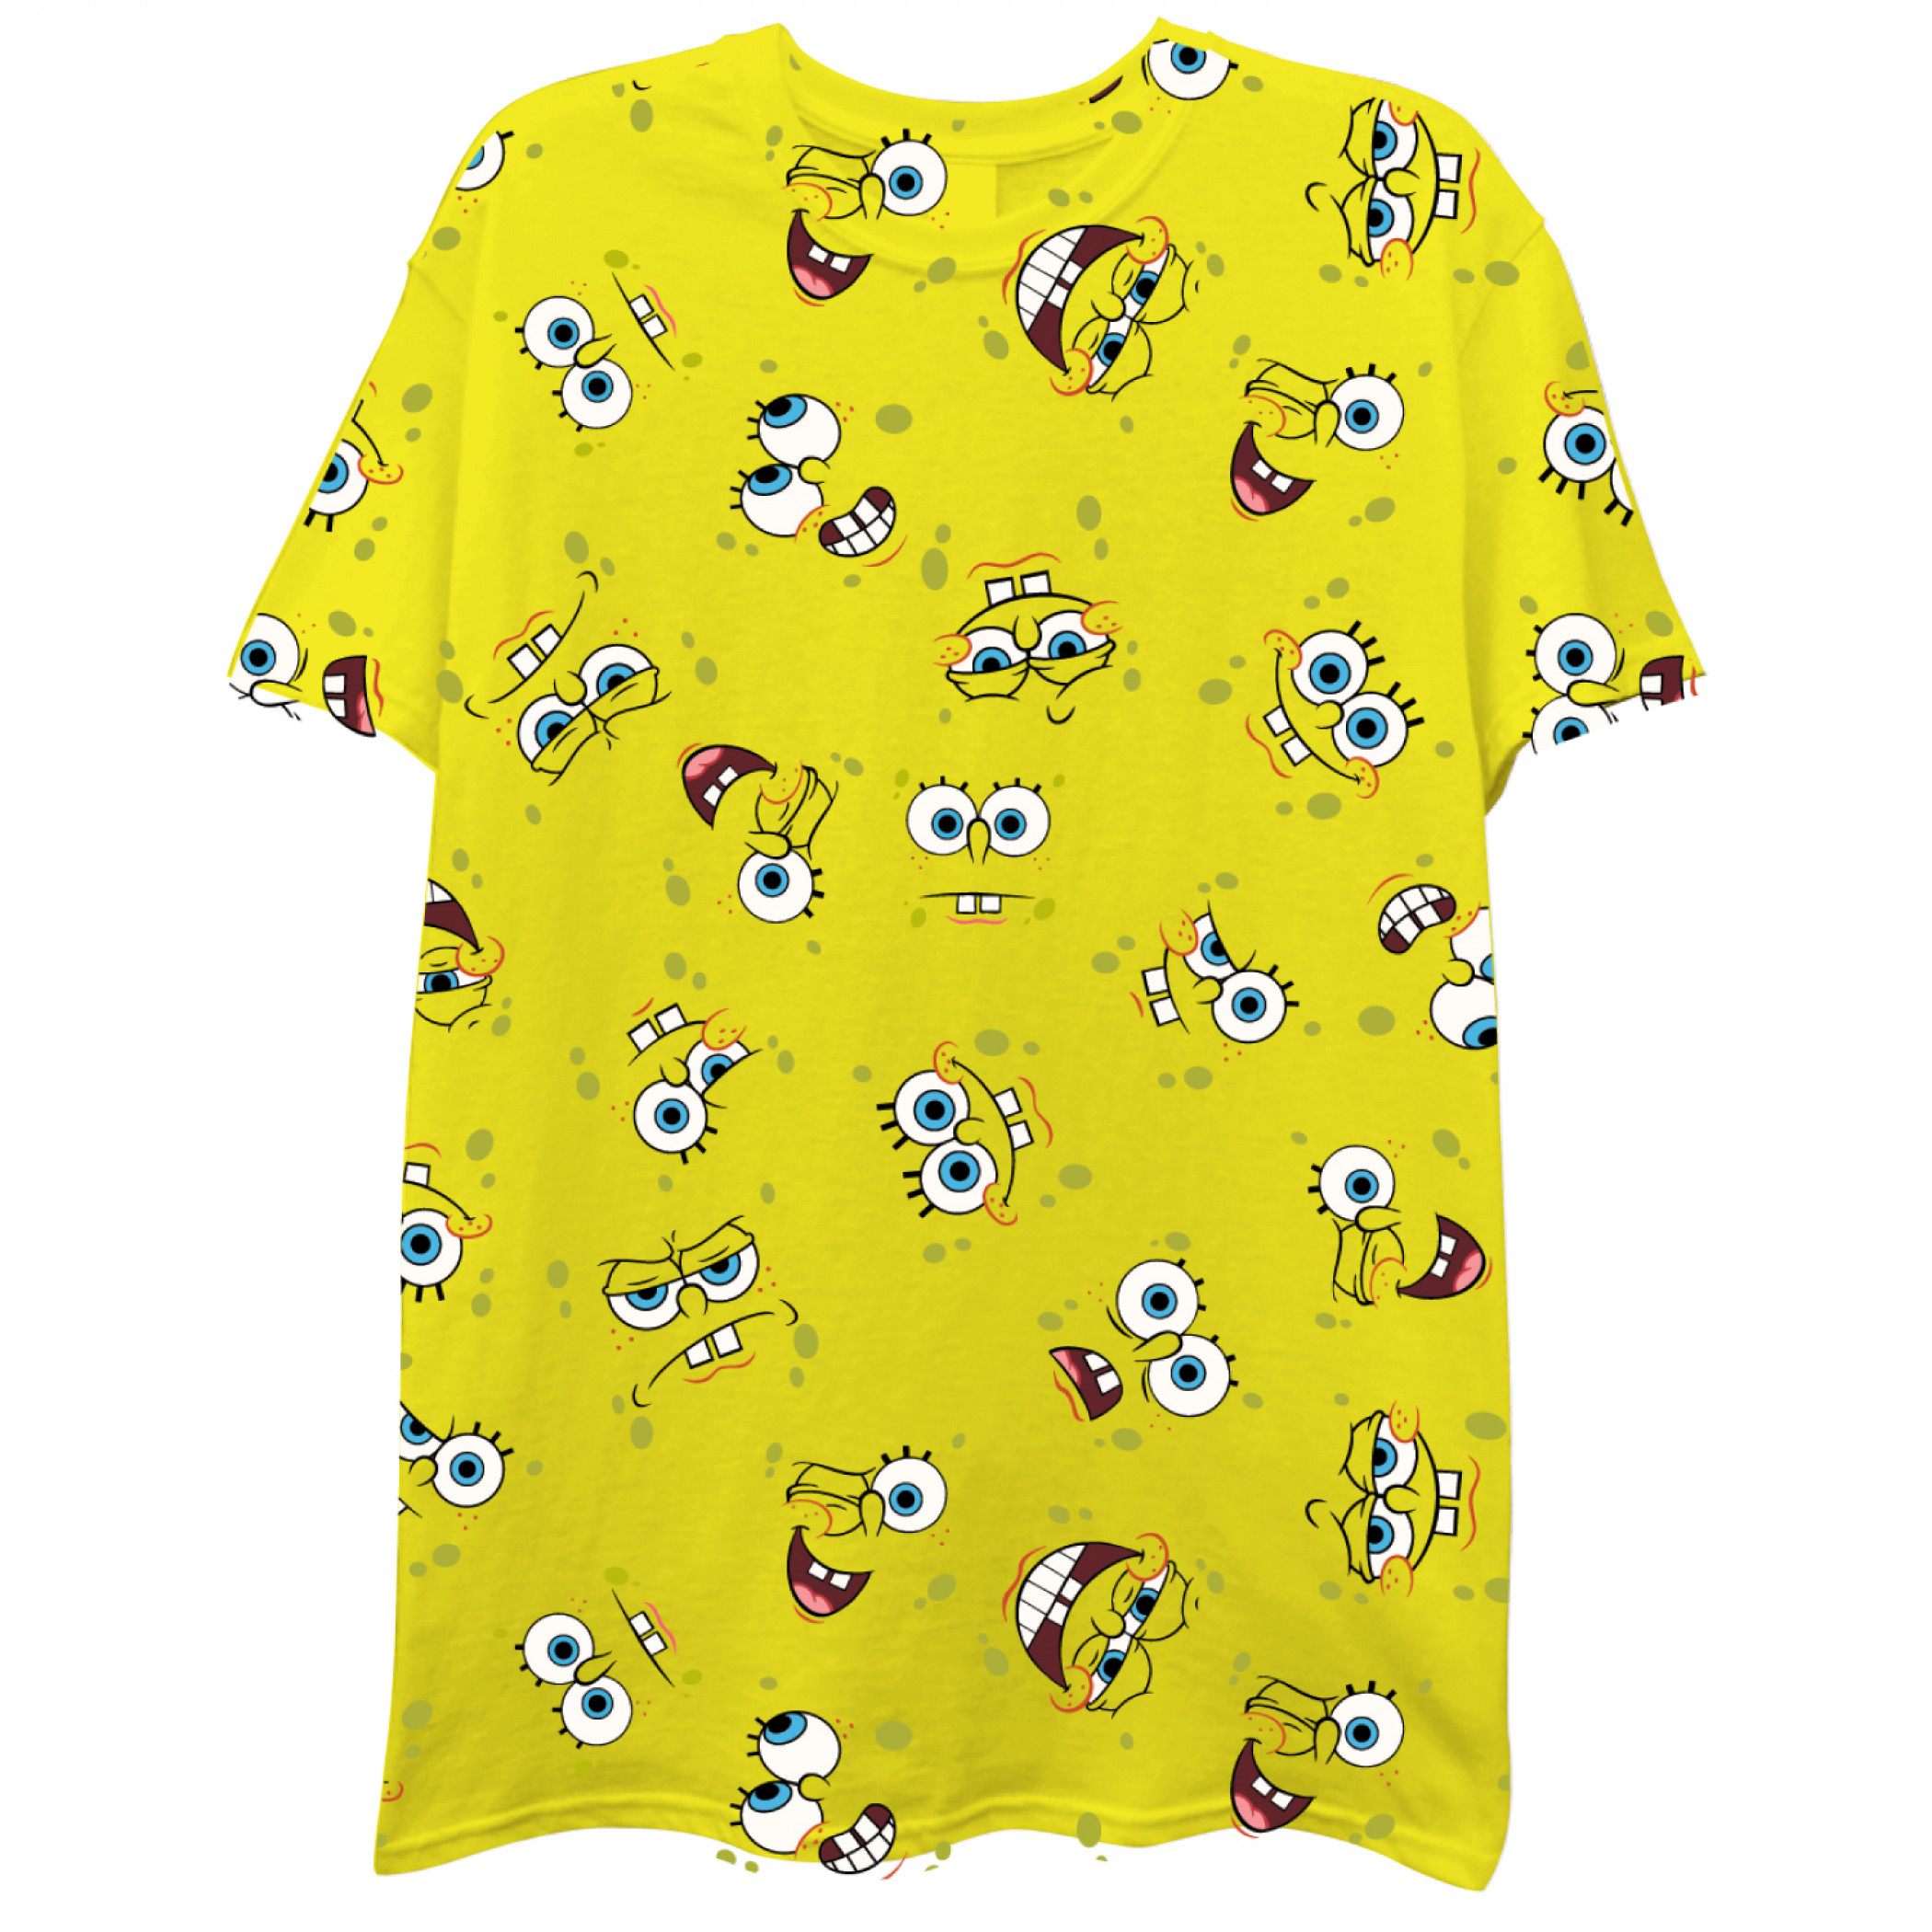 SpongeBob SquarePants All Over Print T-Shirt